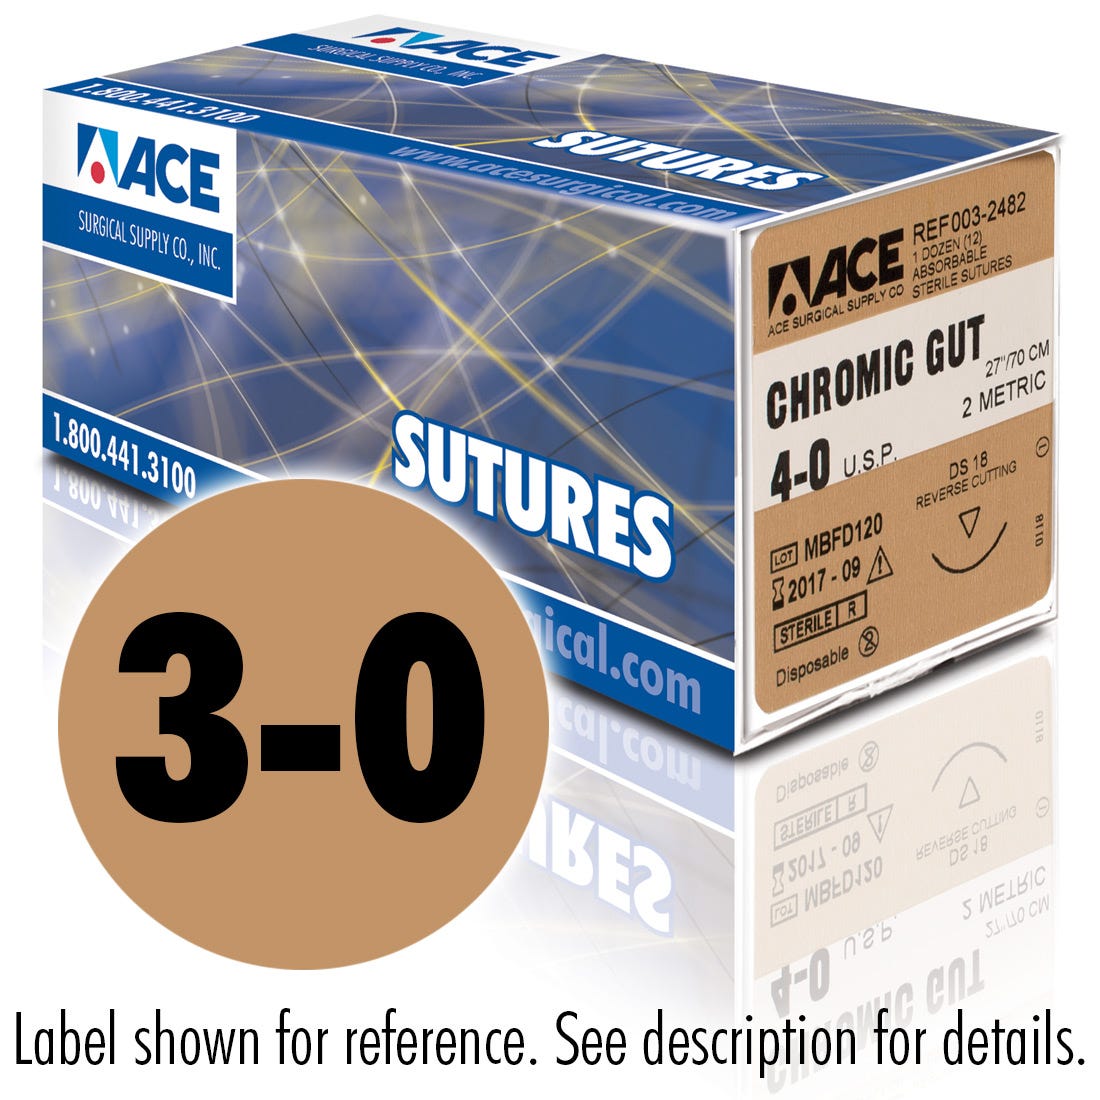 ACE 3-0 Chromic Gut Sutures, HR26, 30", 12/Box